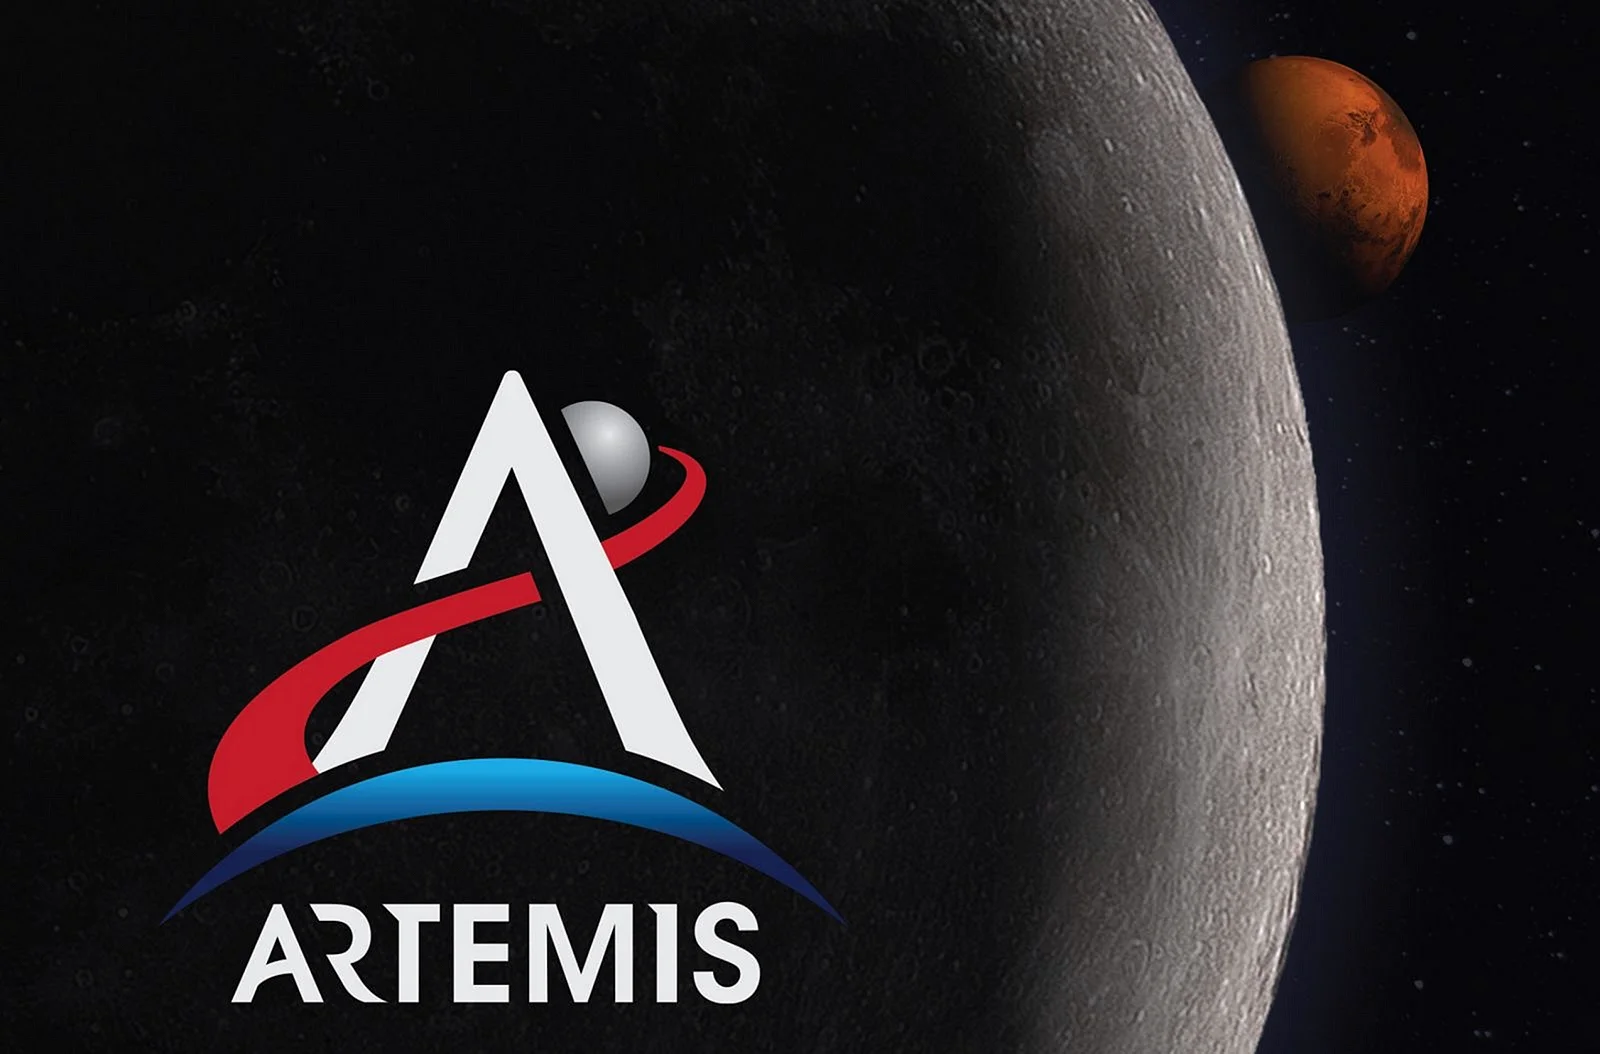 Artemis Program Wallpaper